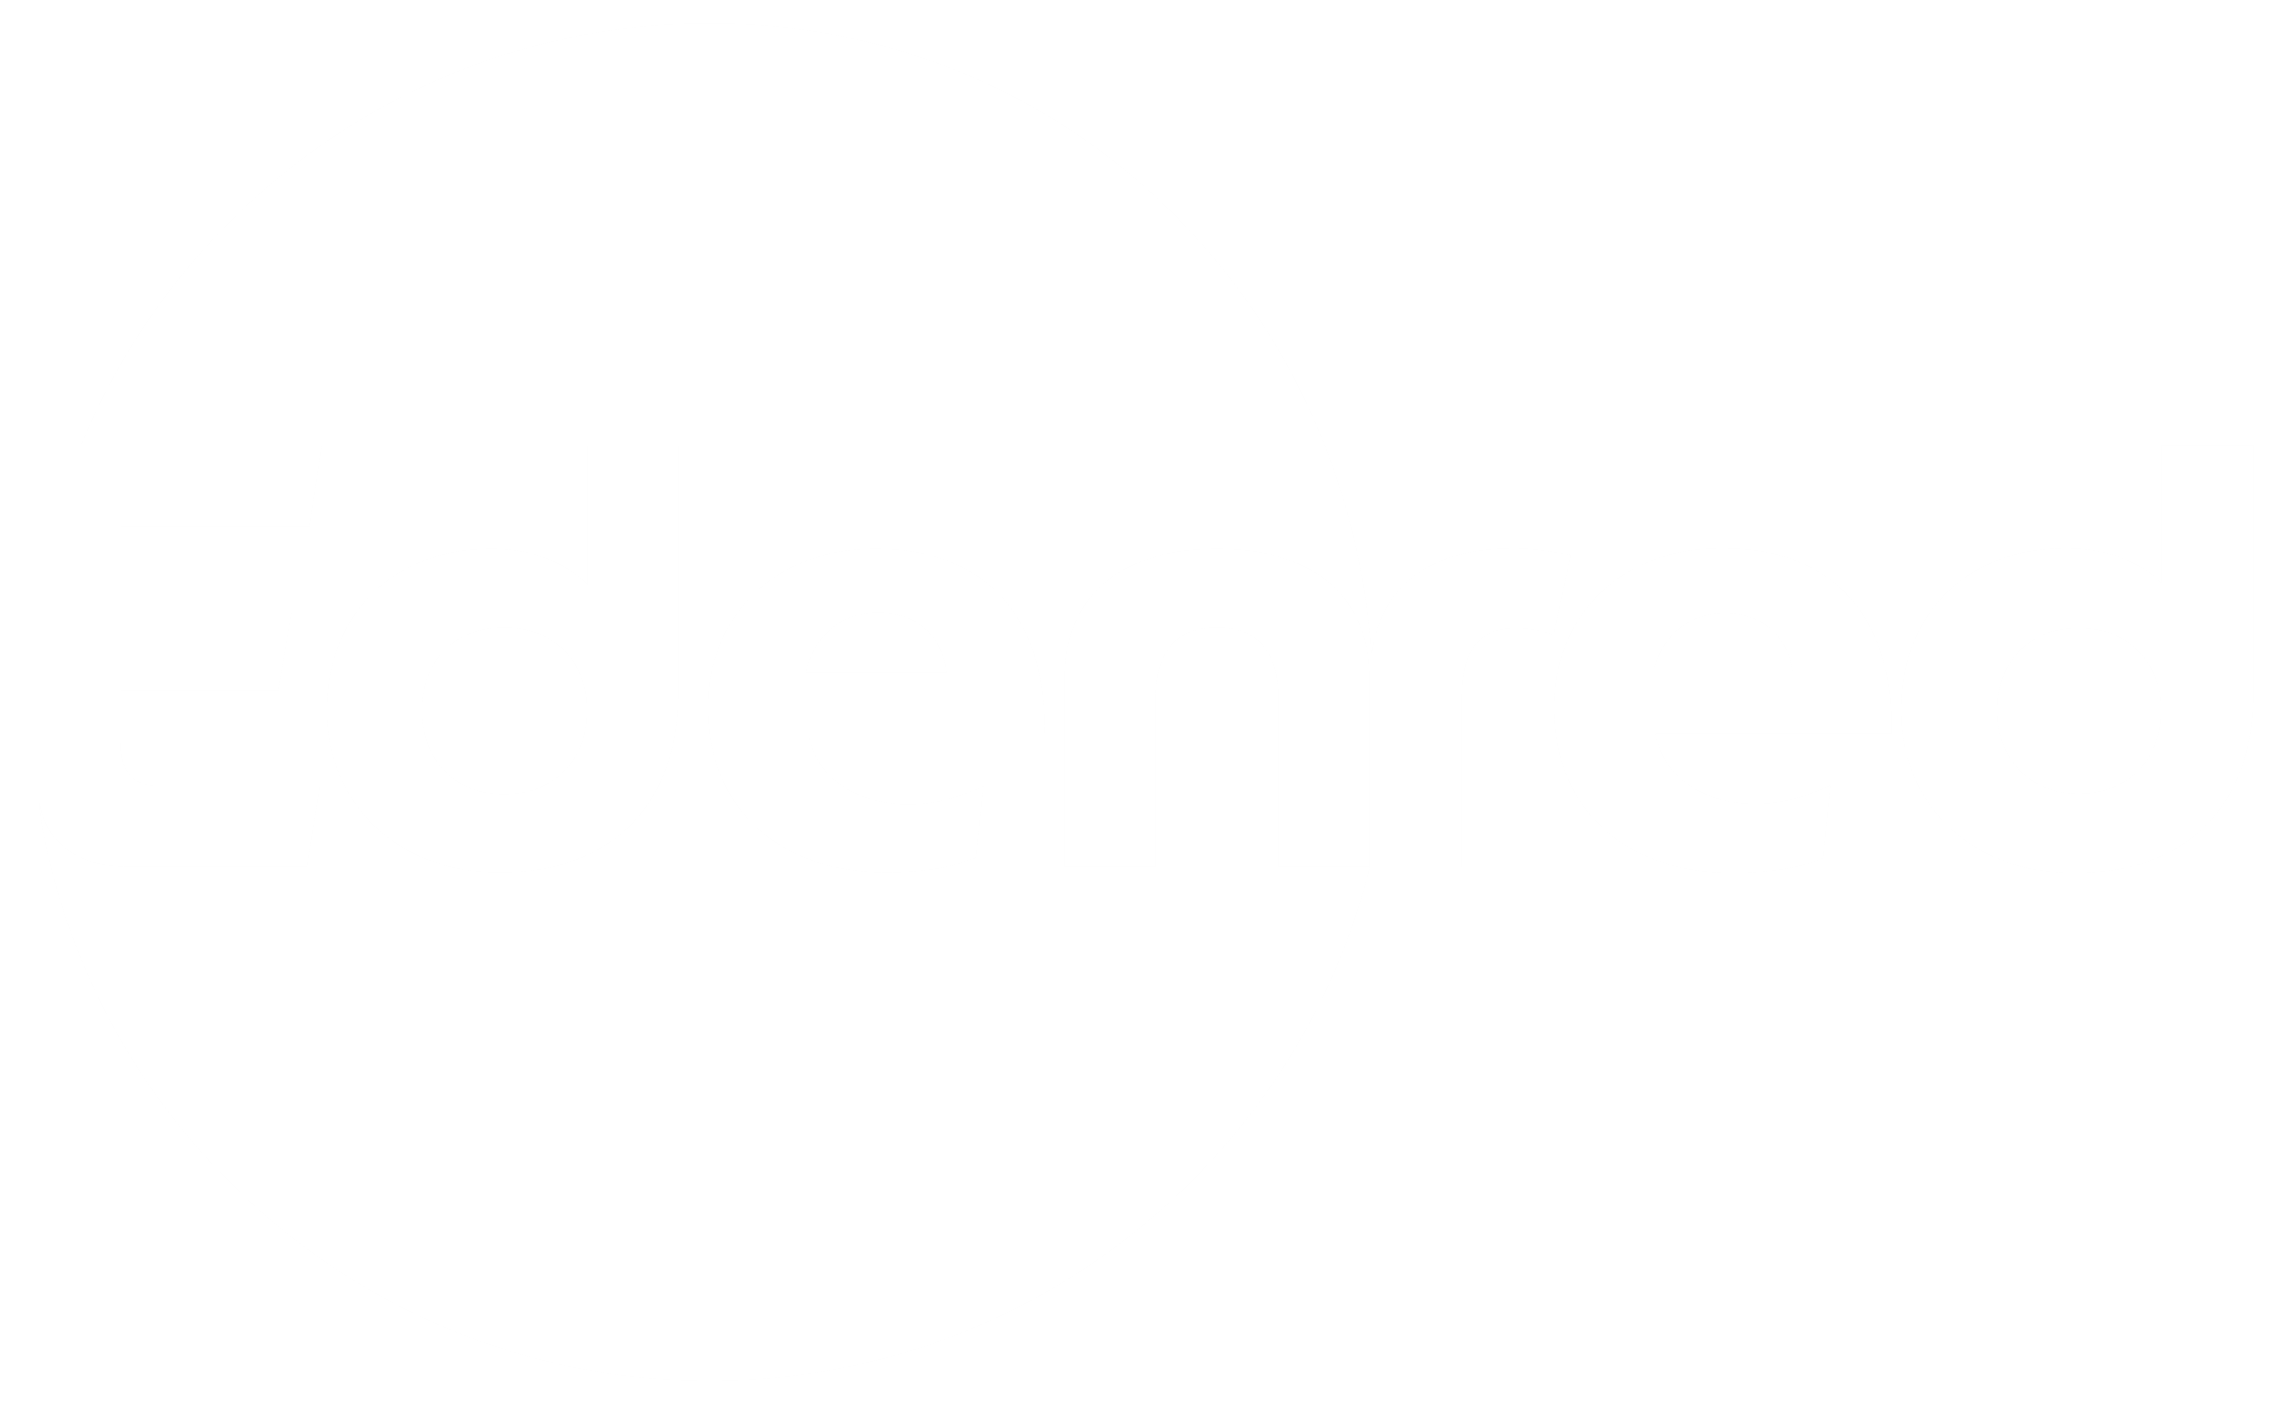 Logotipo da empresa Edenred